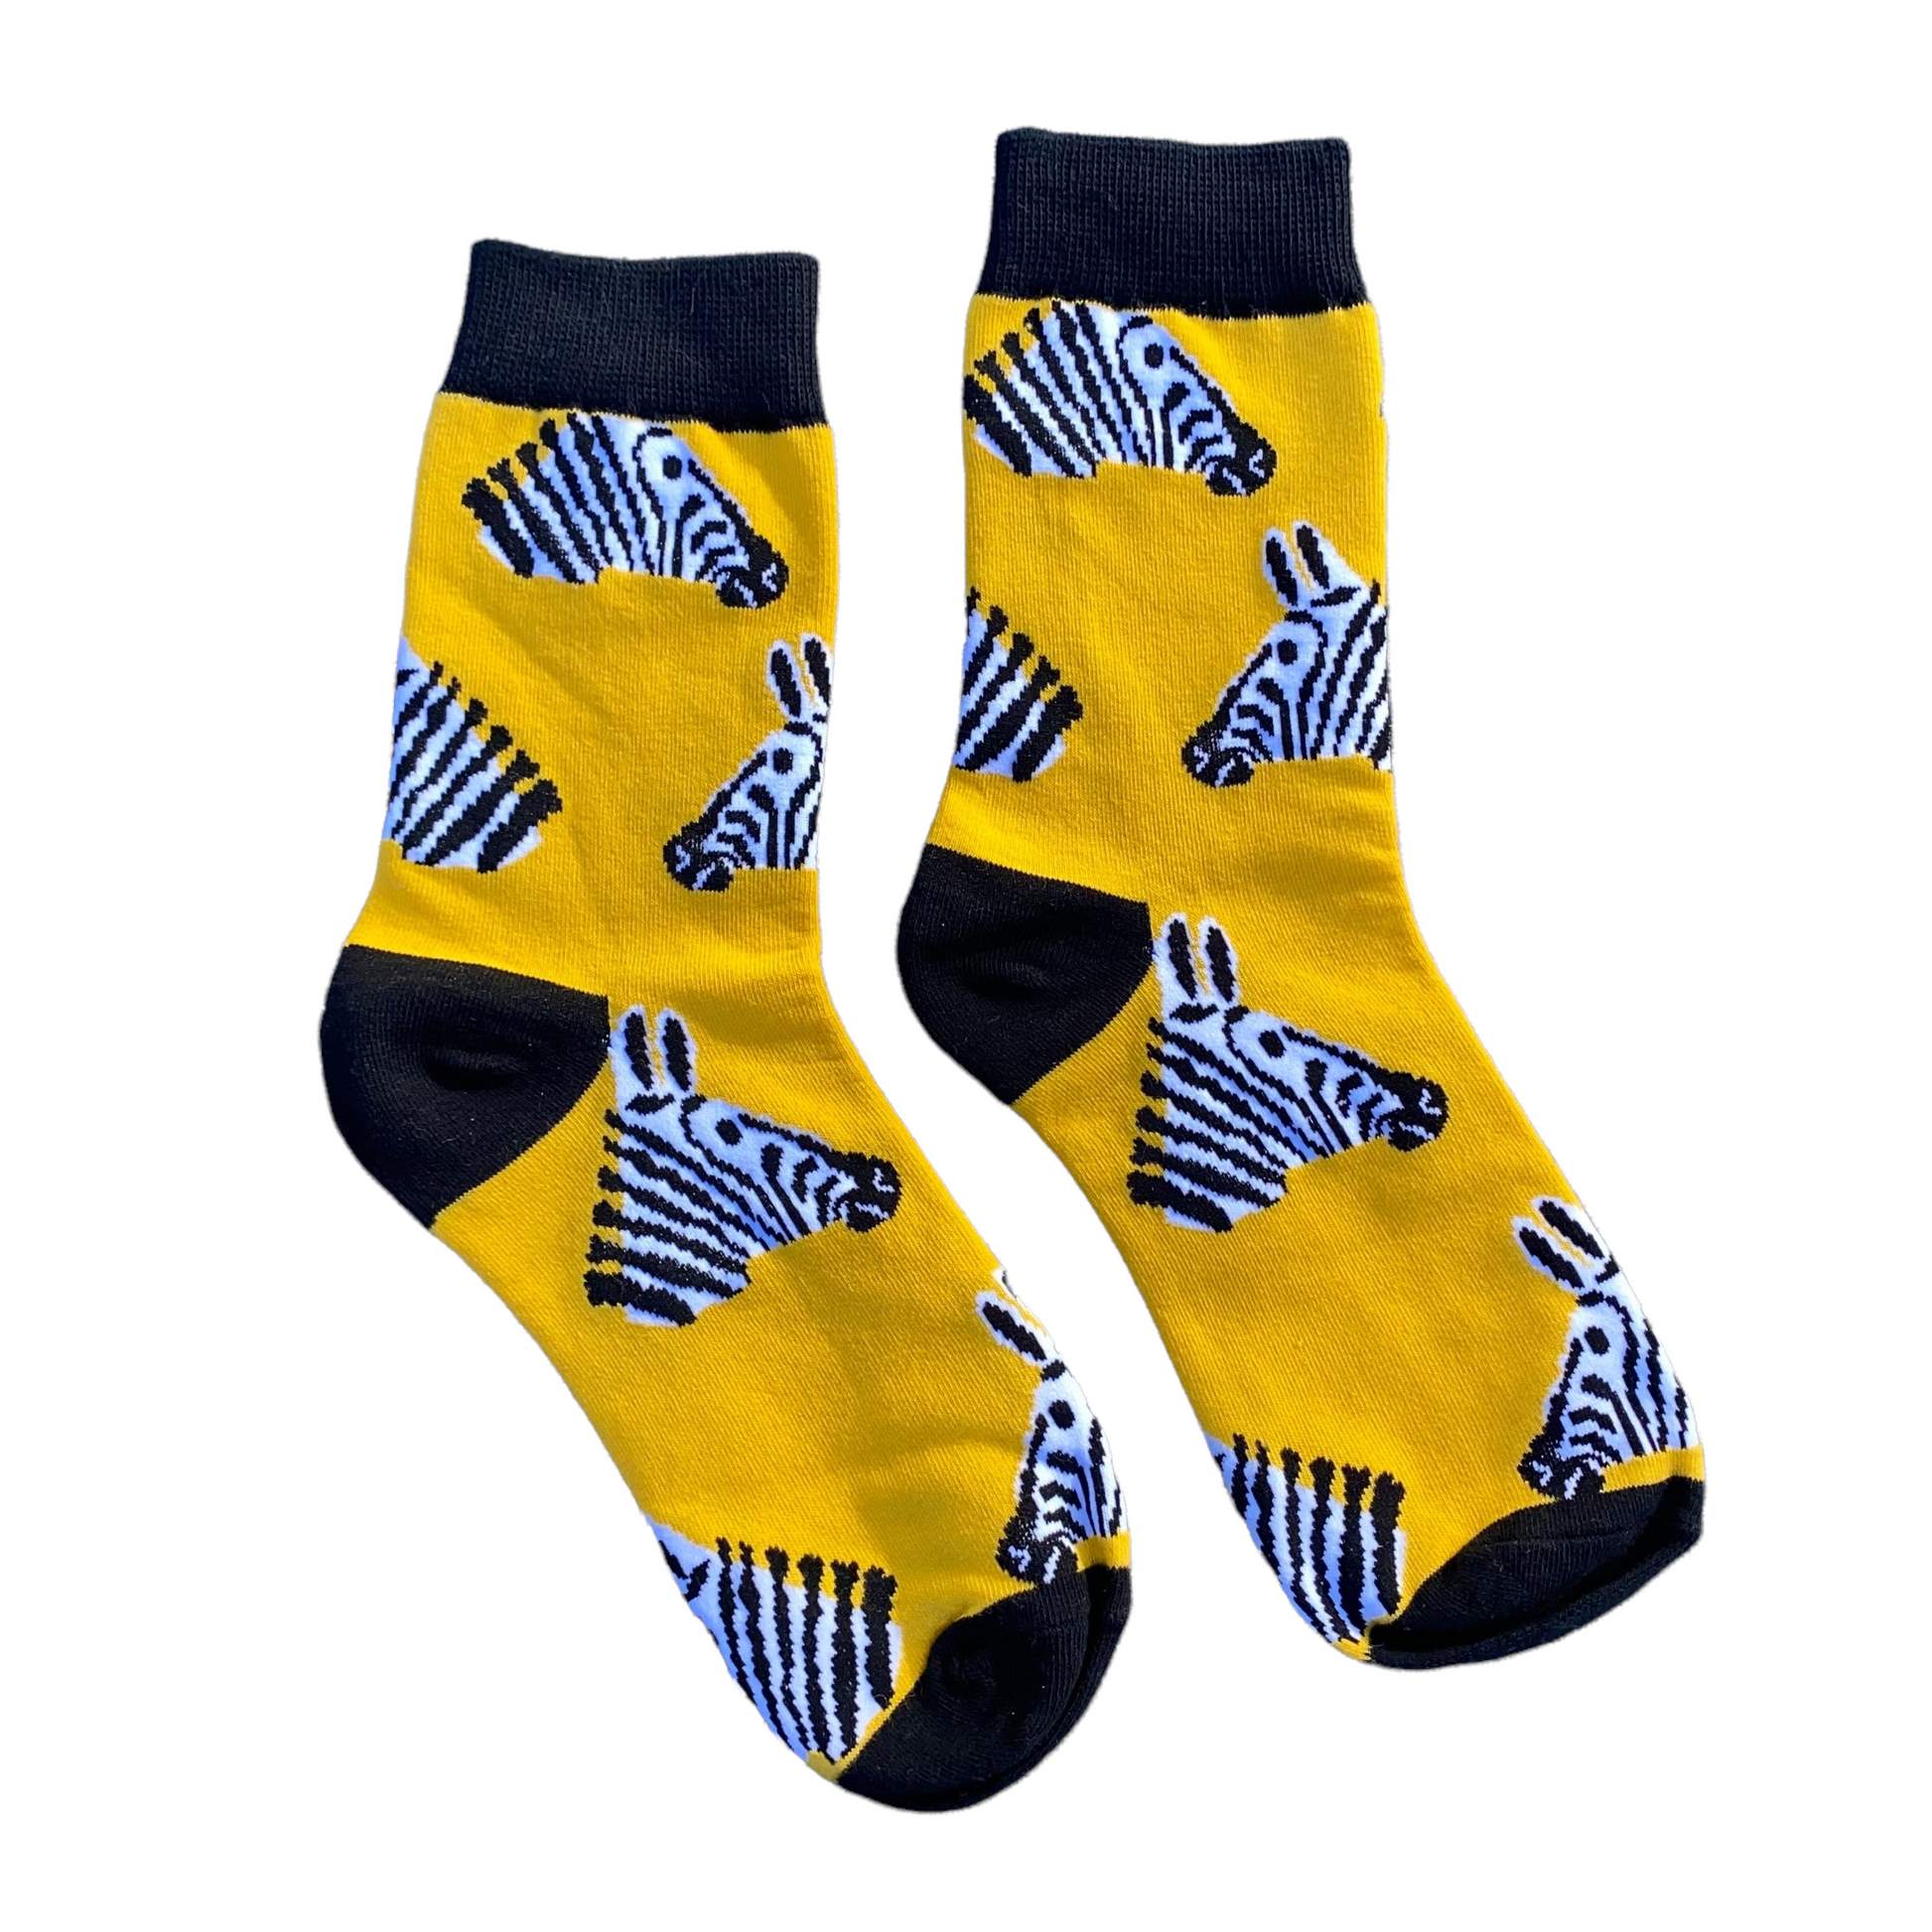 Socks — Zebra  SPIRIT SPARKPLUGS Yellow  